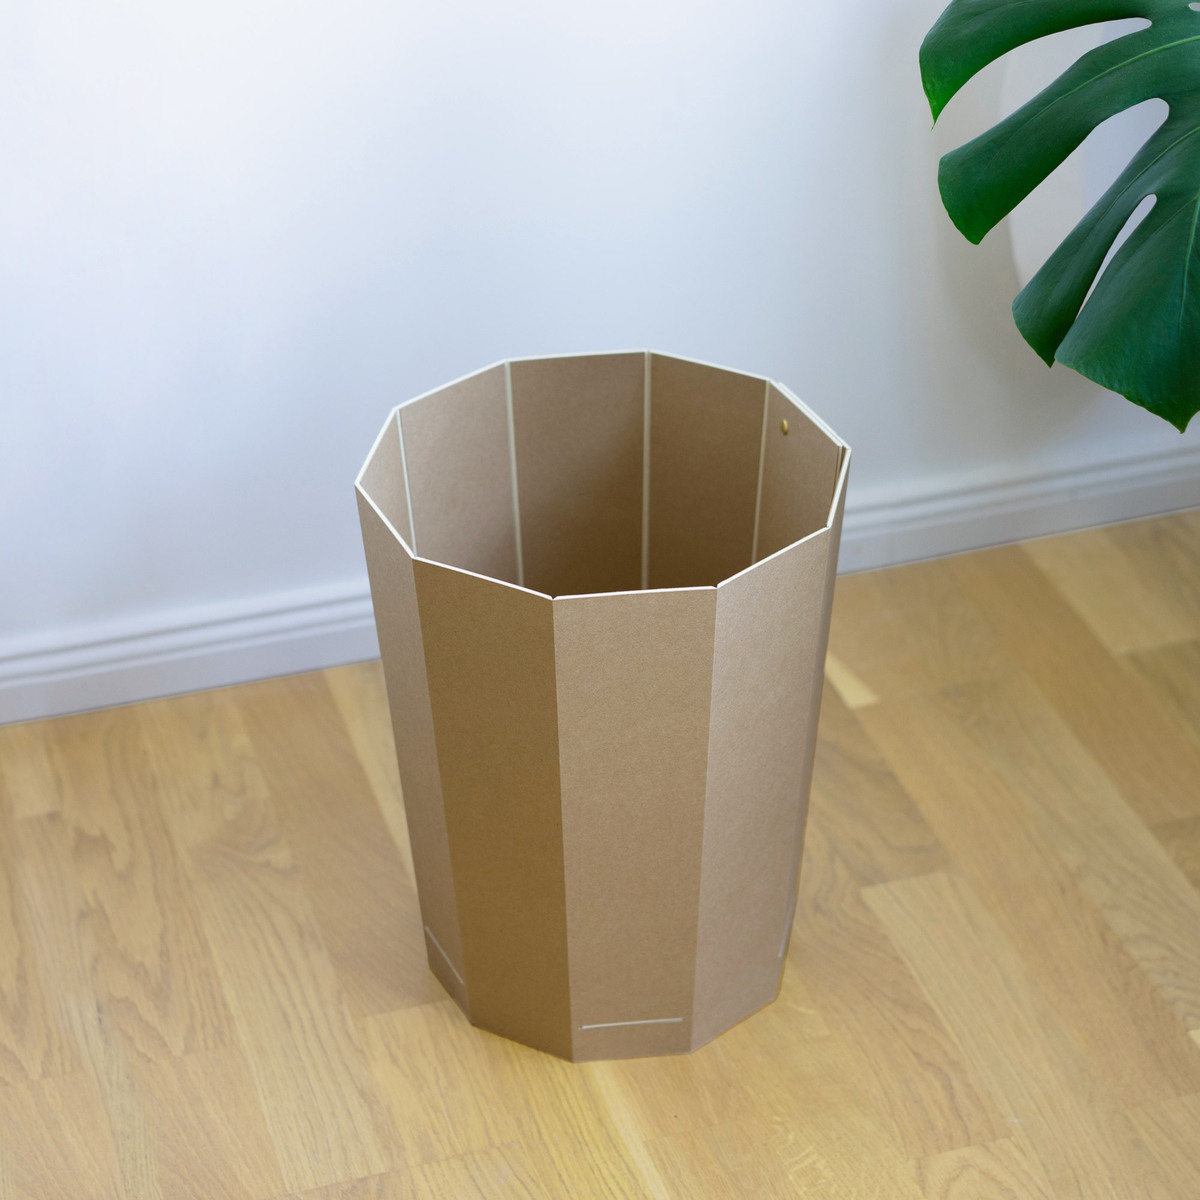 KROMA Kraft cardboard application example wastepaper bin